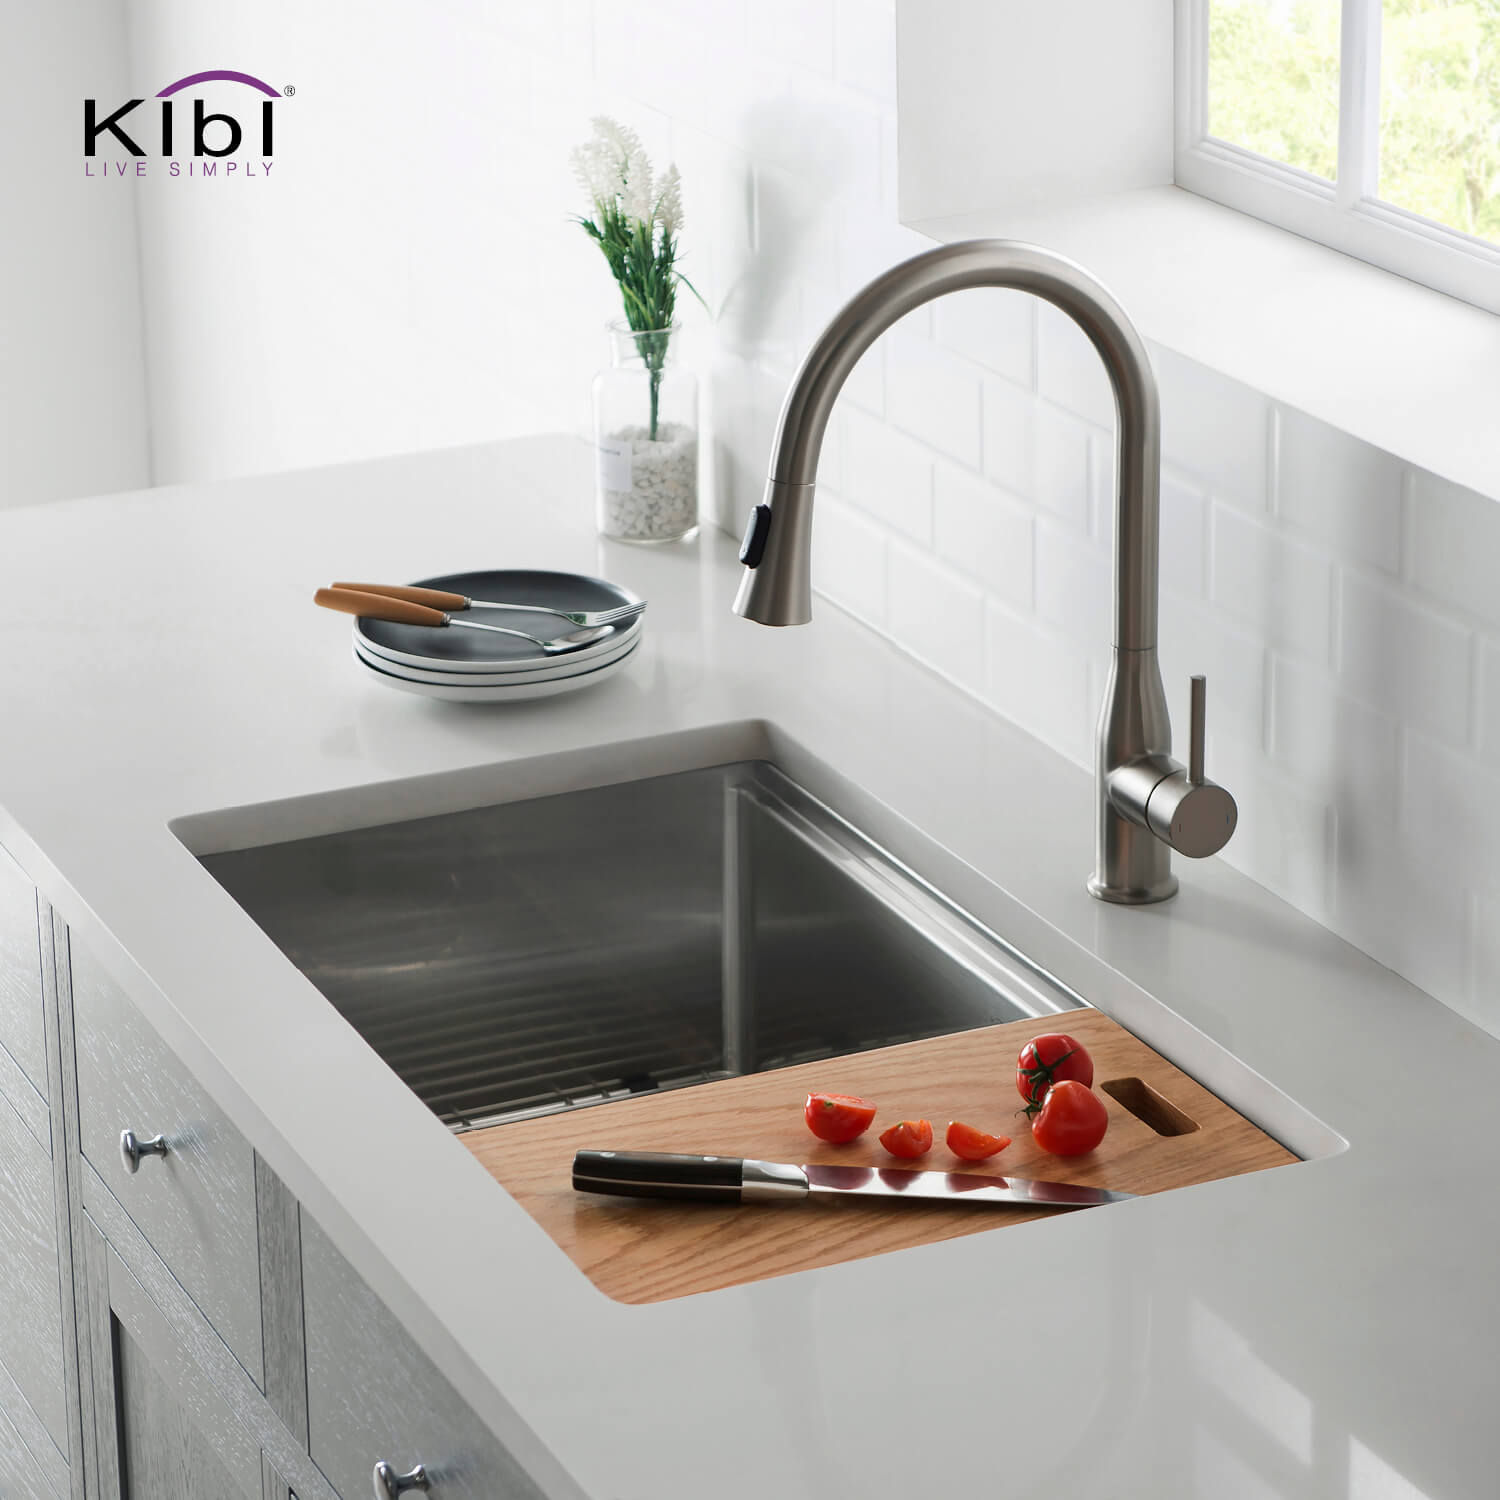 Kibi 32 3/4" x 19" x 10" Single Bowl Undermount Workstation Sink In Satin Finish